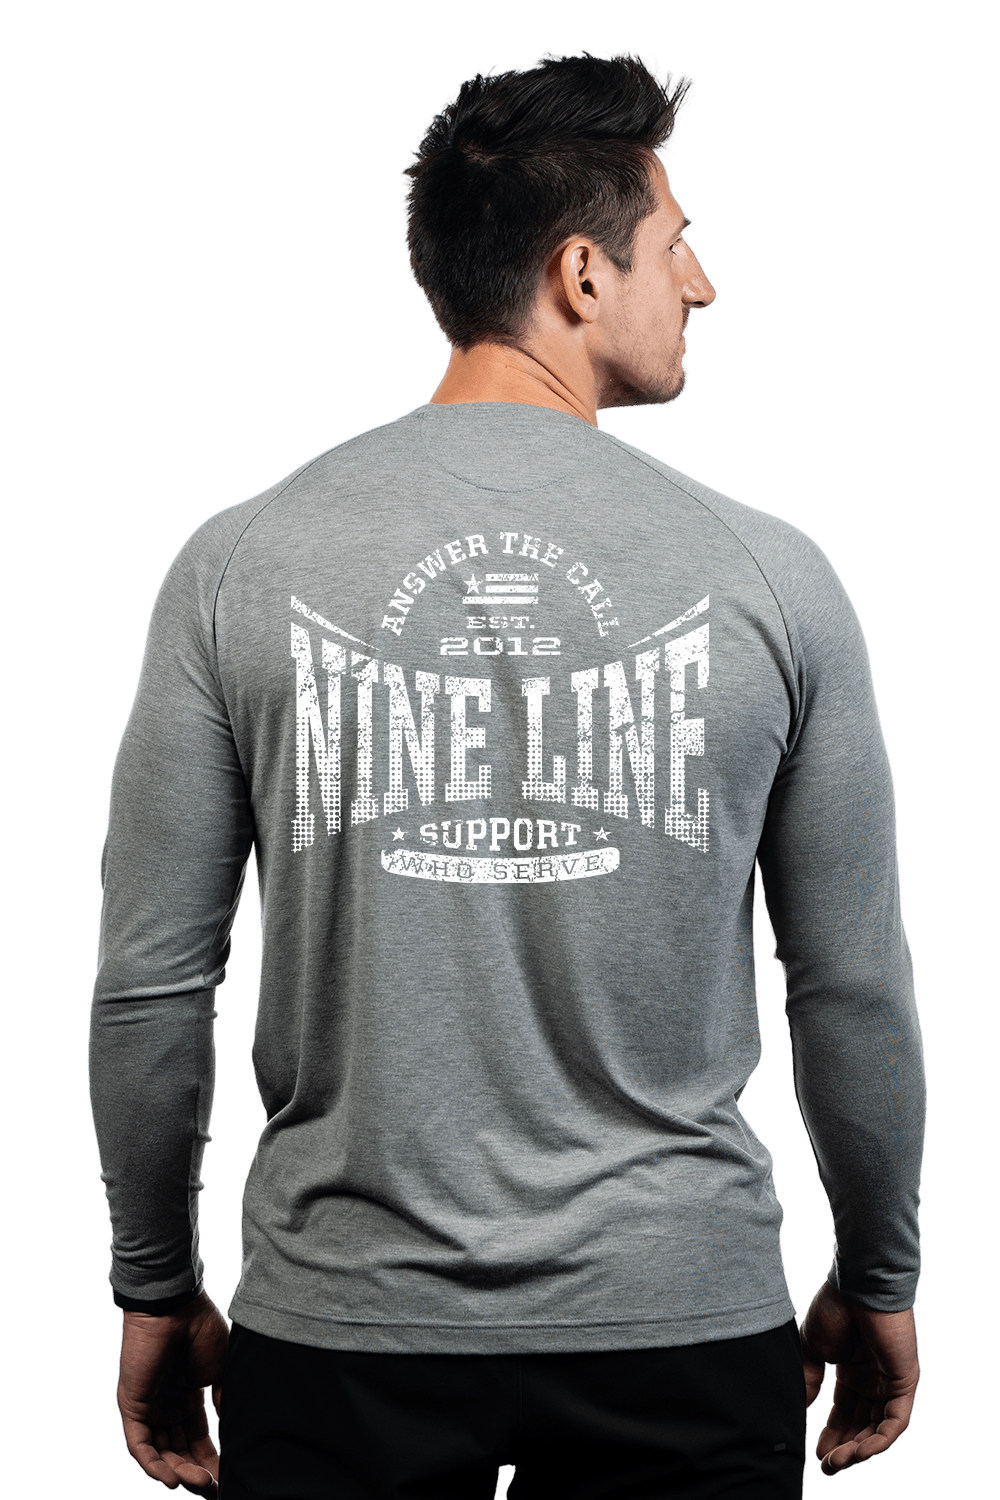 Support Who Serve - SFG Performance Tri-blend Shirt - Nine Line Apparel